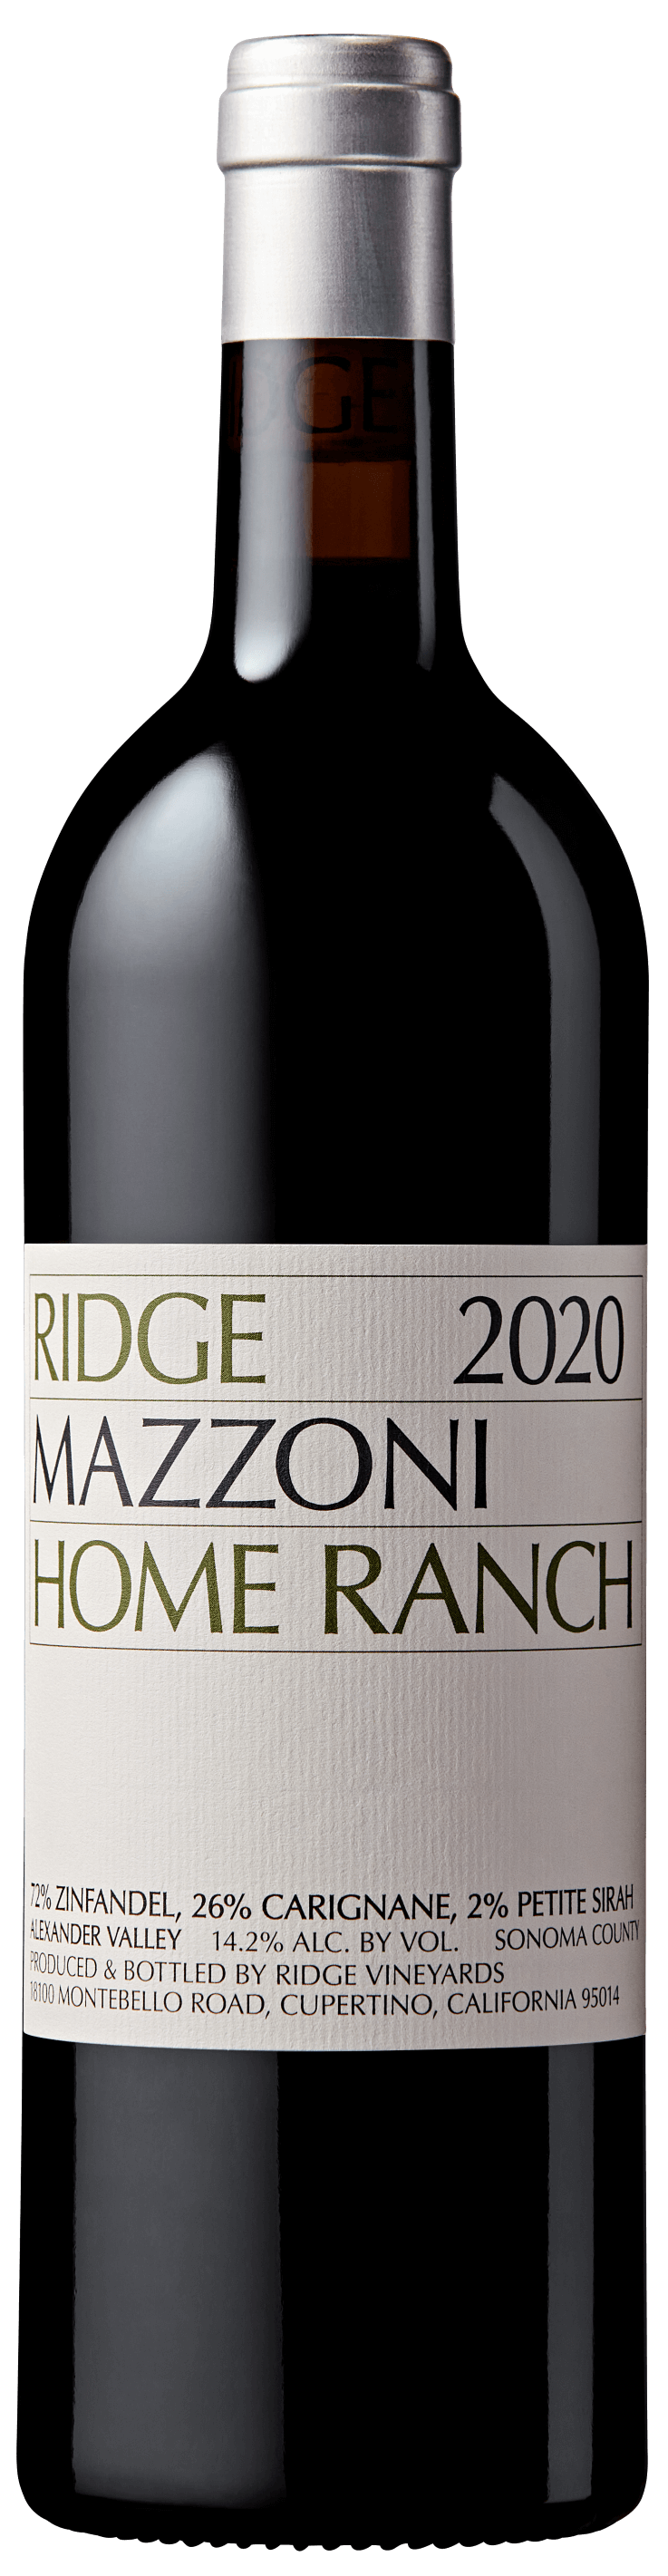 2020 Mazzoni Home Ranch